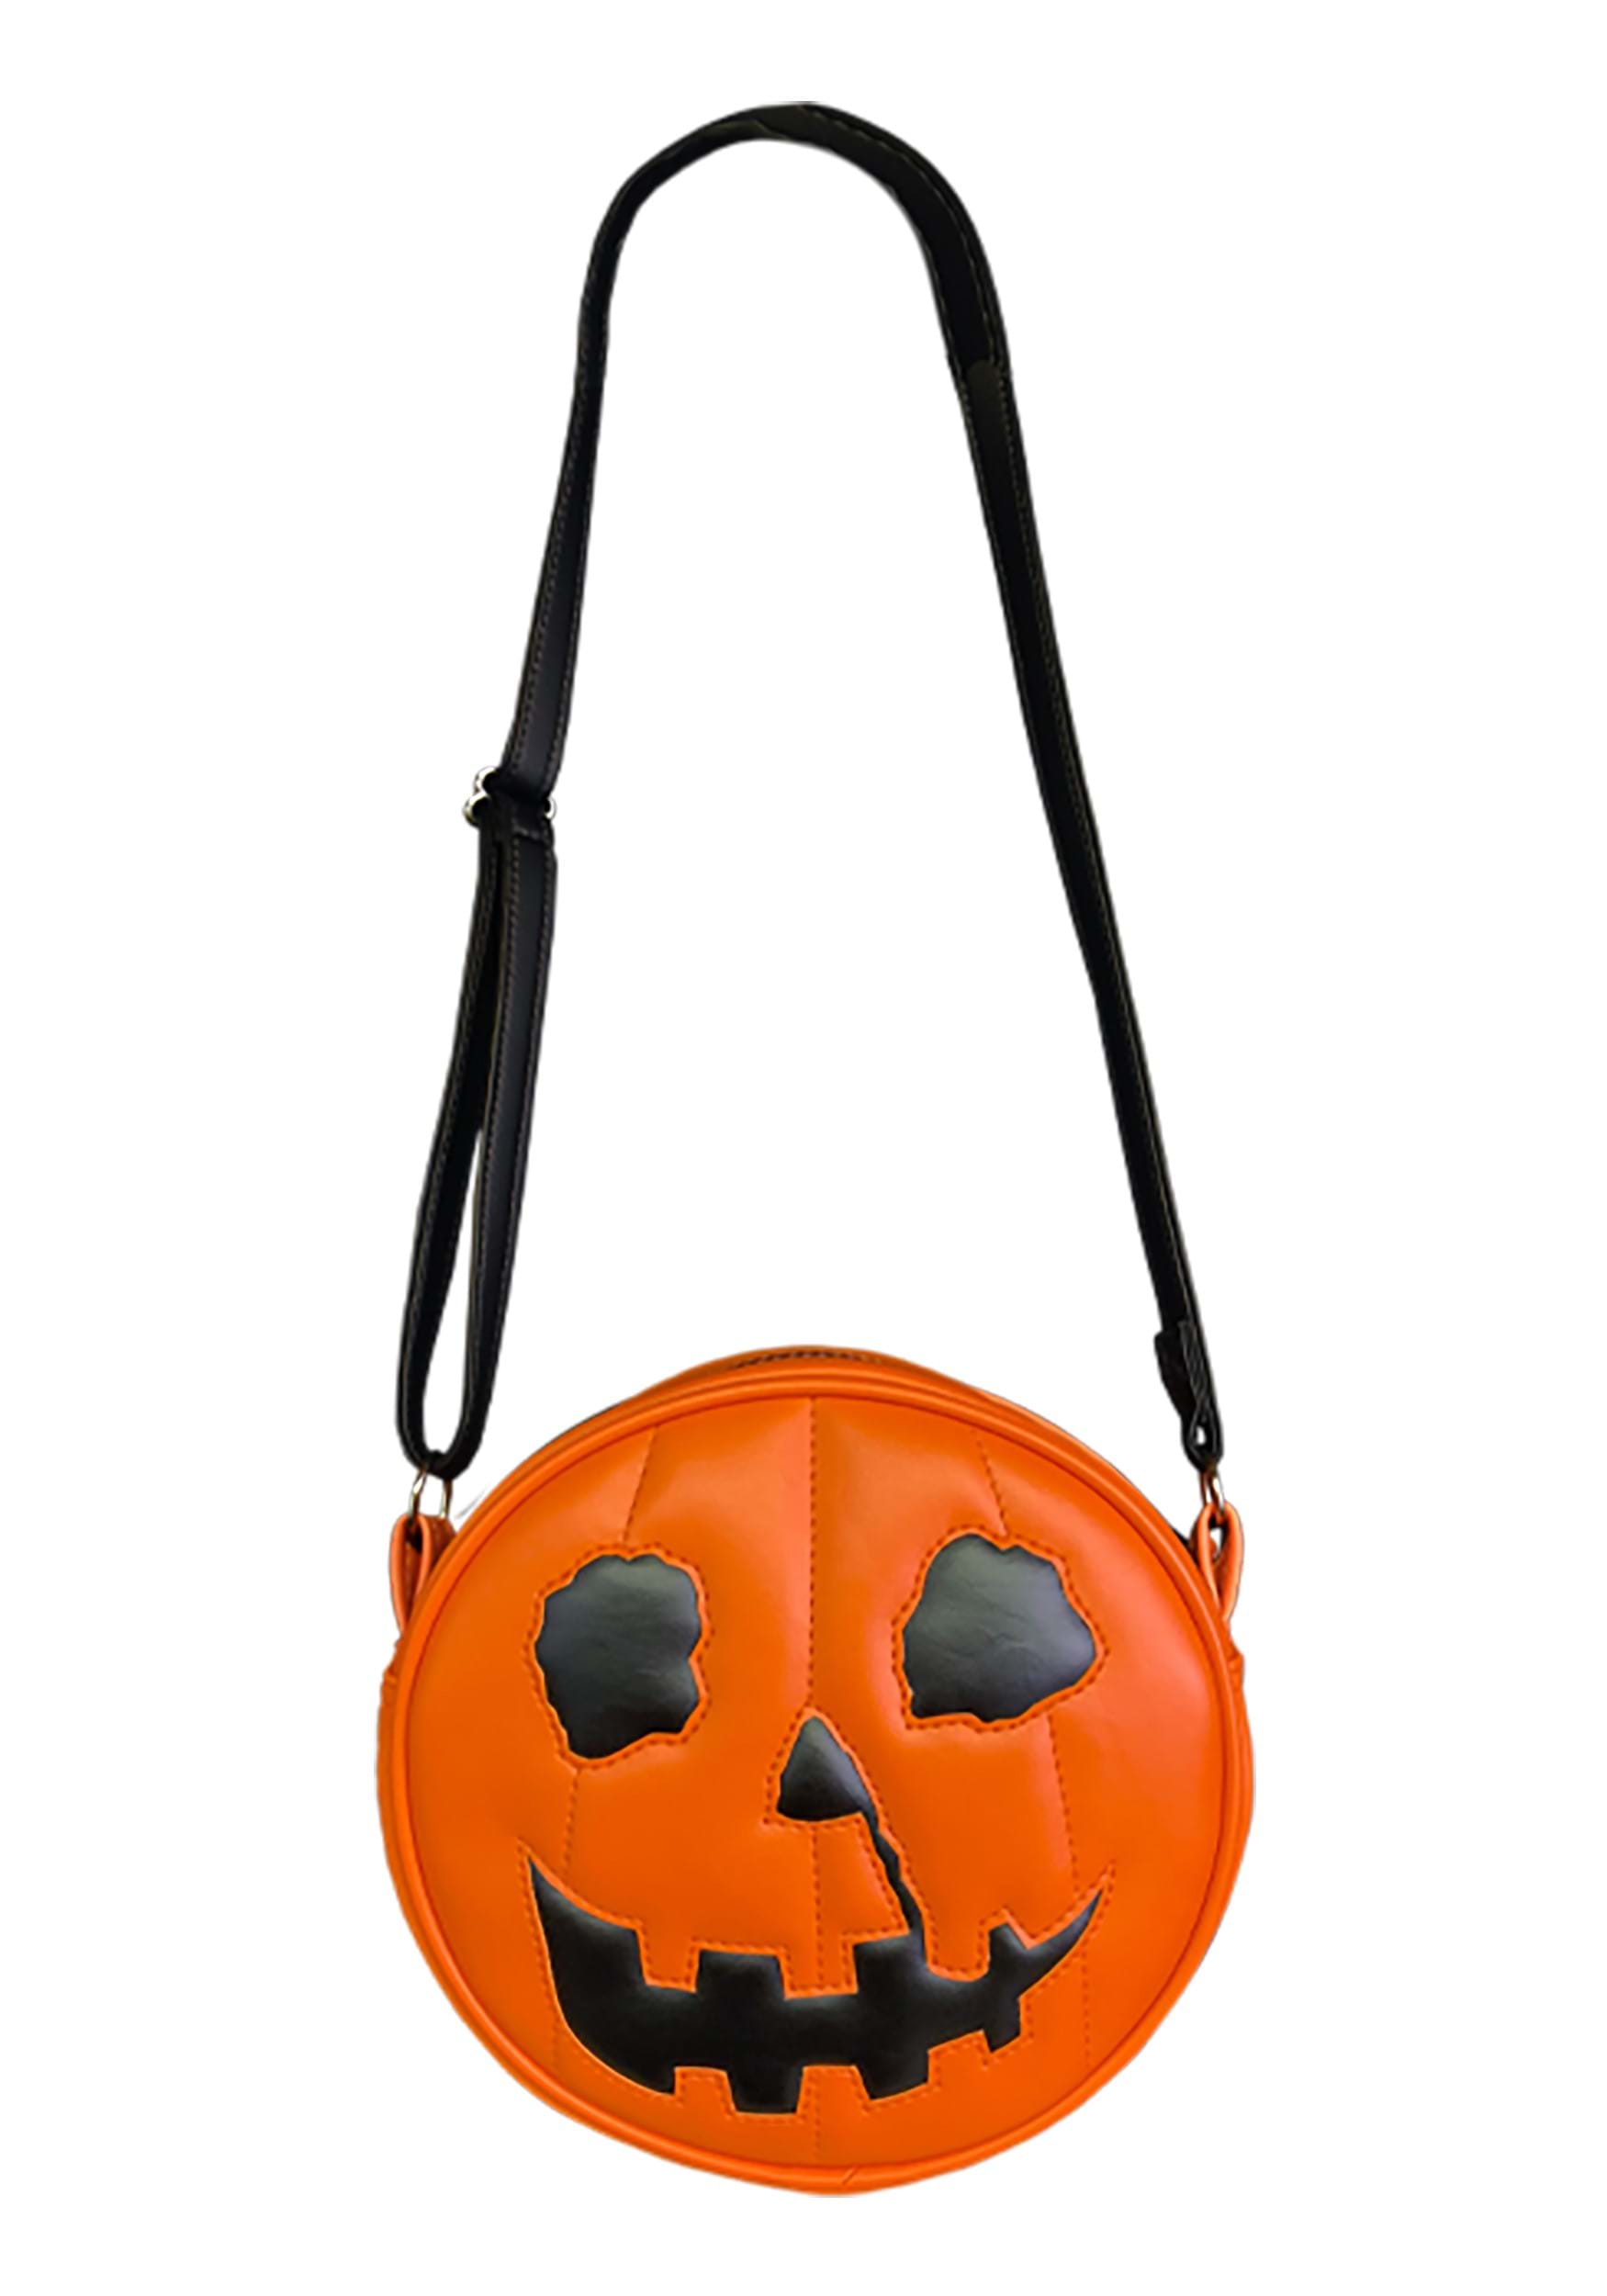 Ondeam Halloween Pumpkin Shoulder bag,Bat ornament Fashion PU Purses for Women Girl 